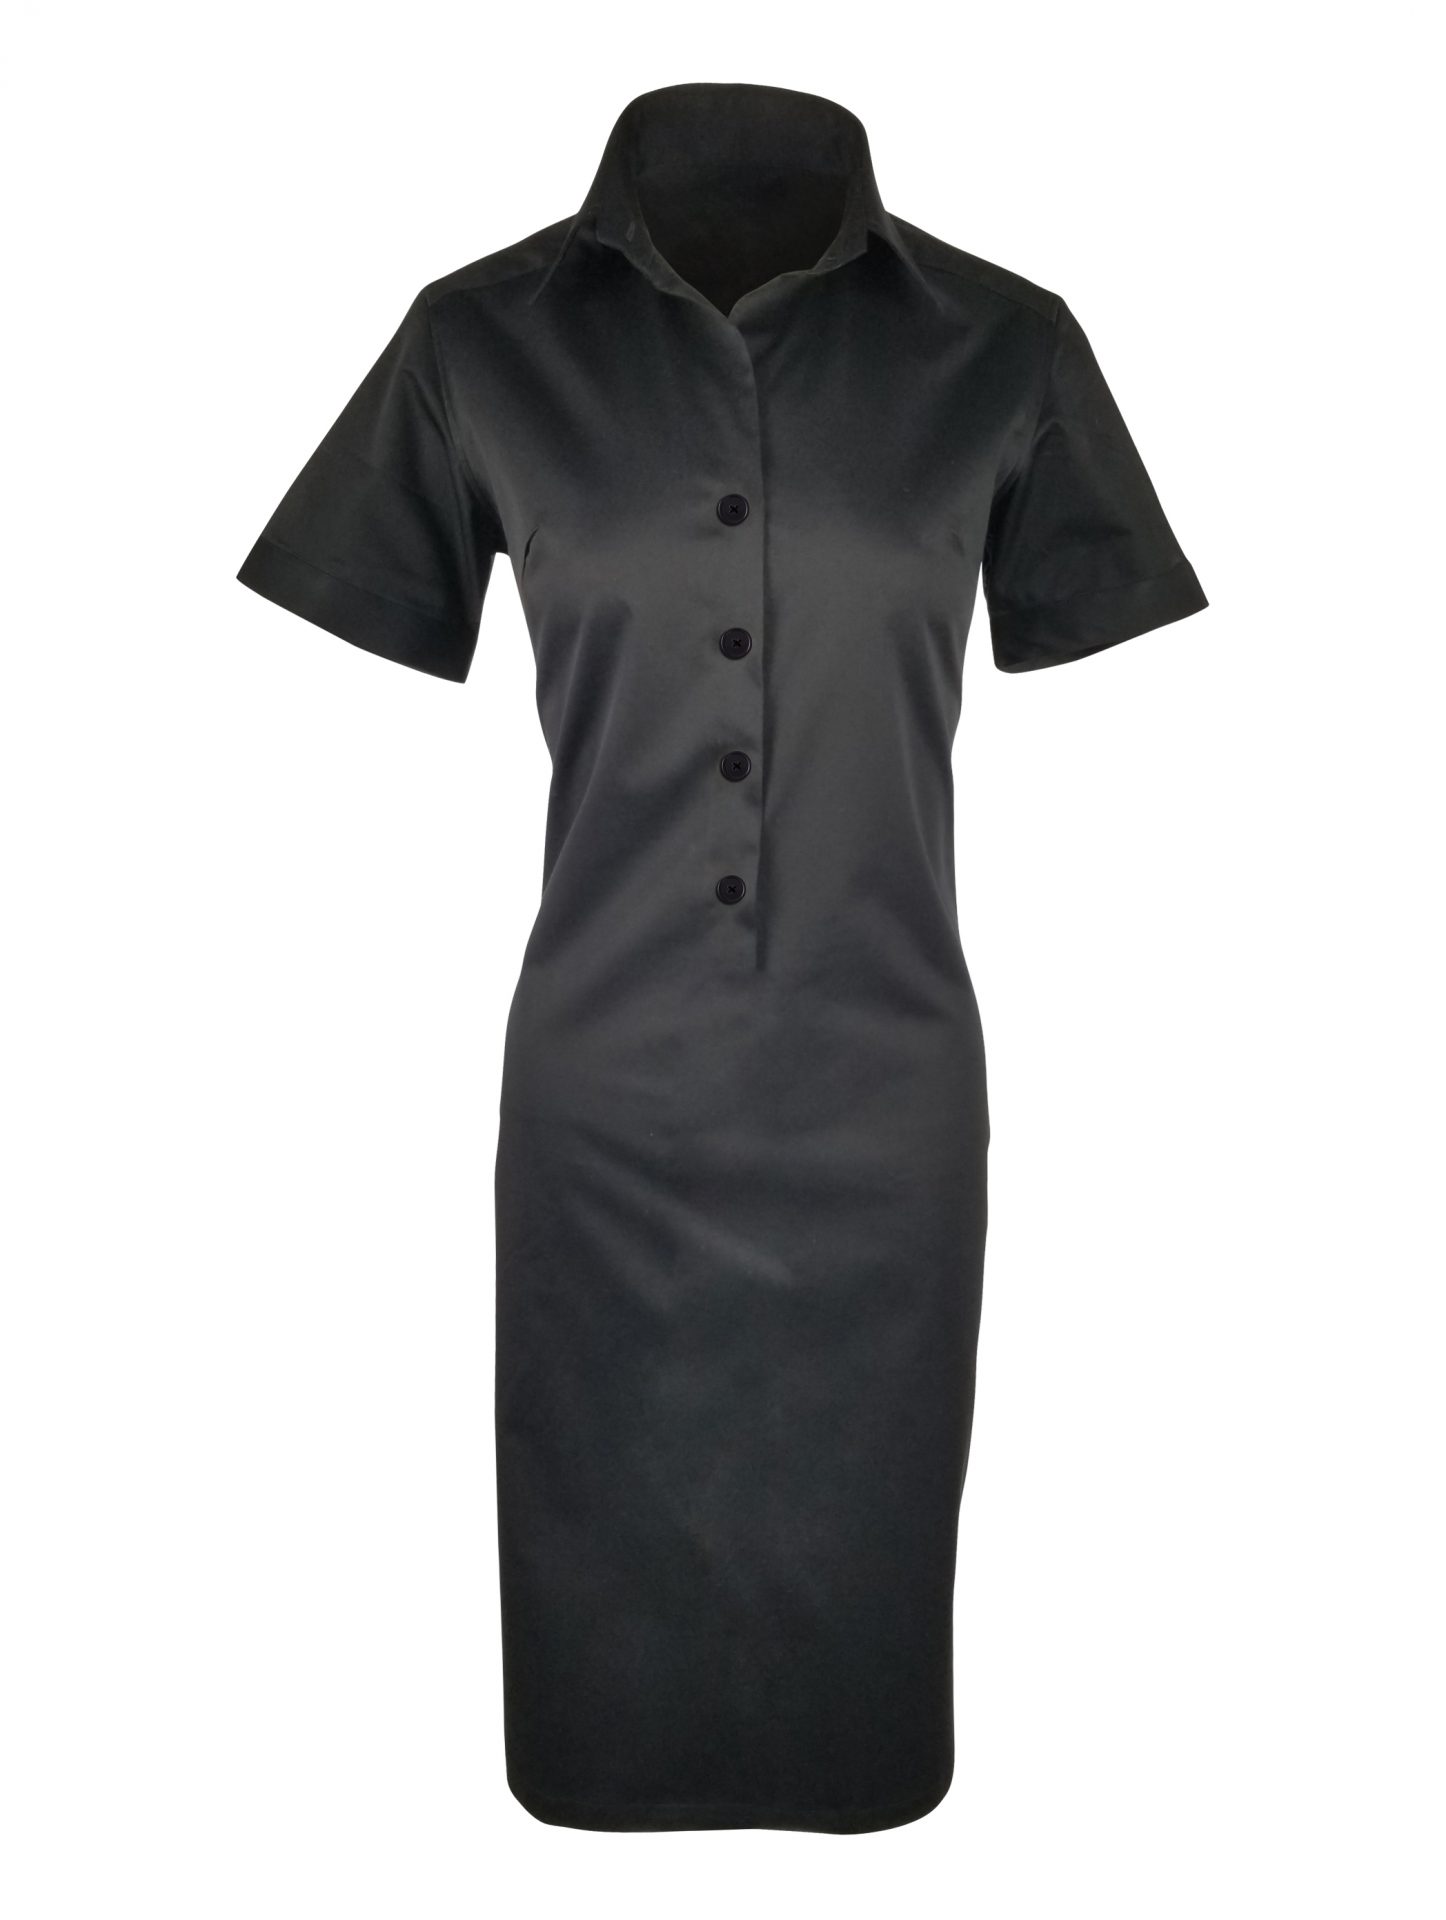 Shirt Dress - Black Short Sleeve - Uniform Edit